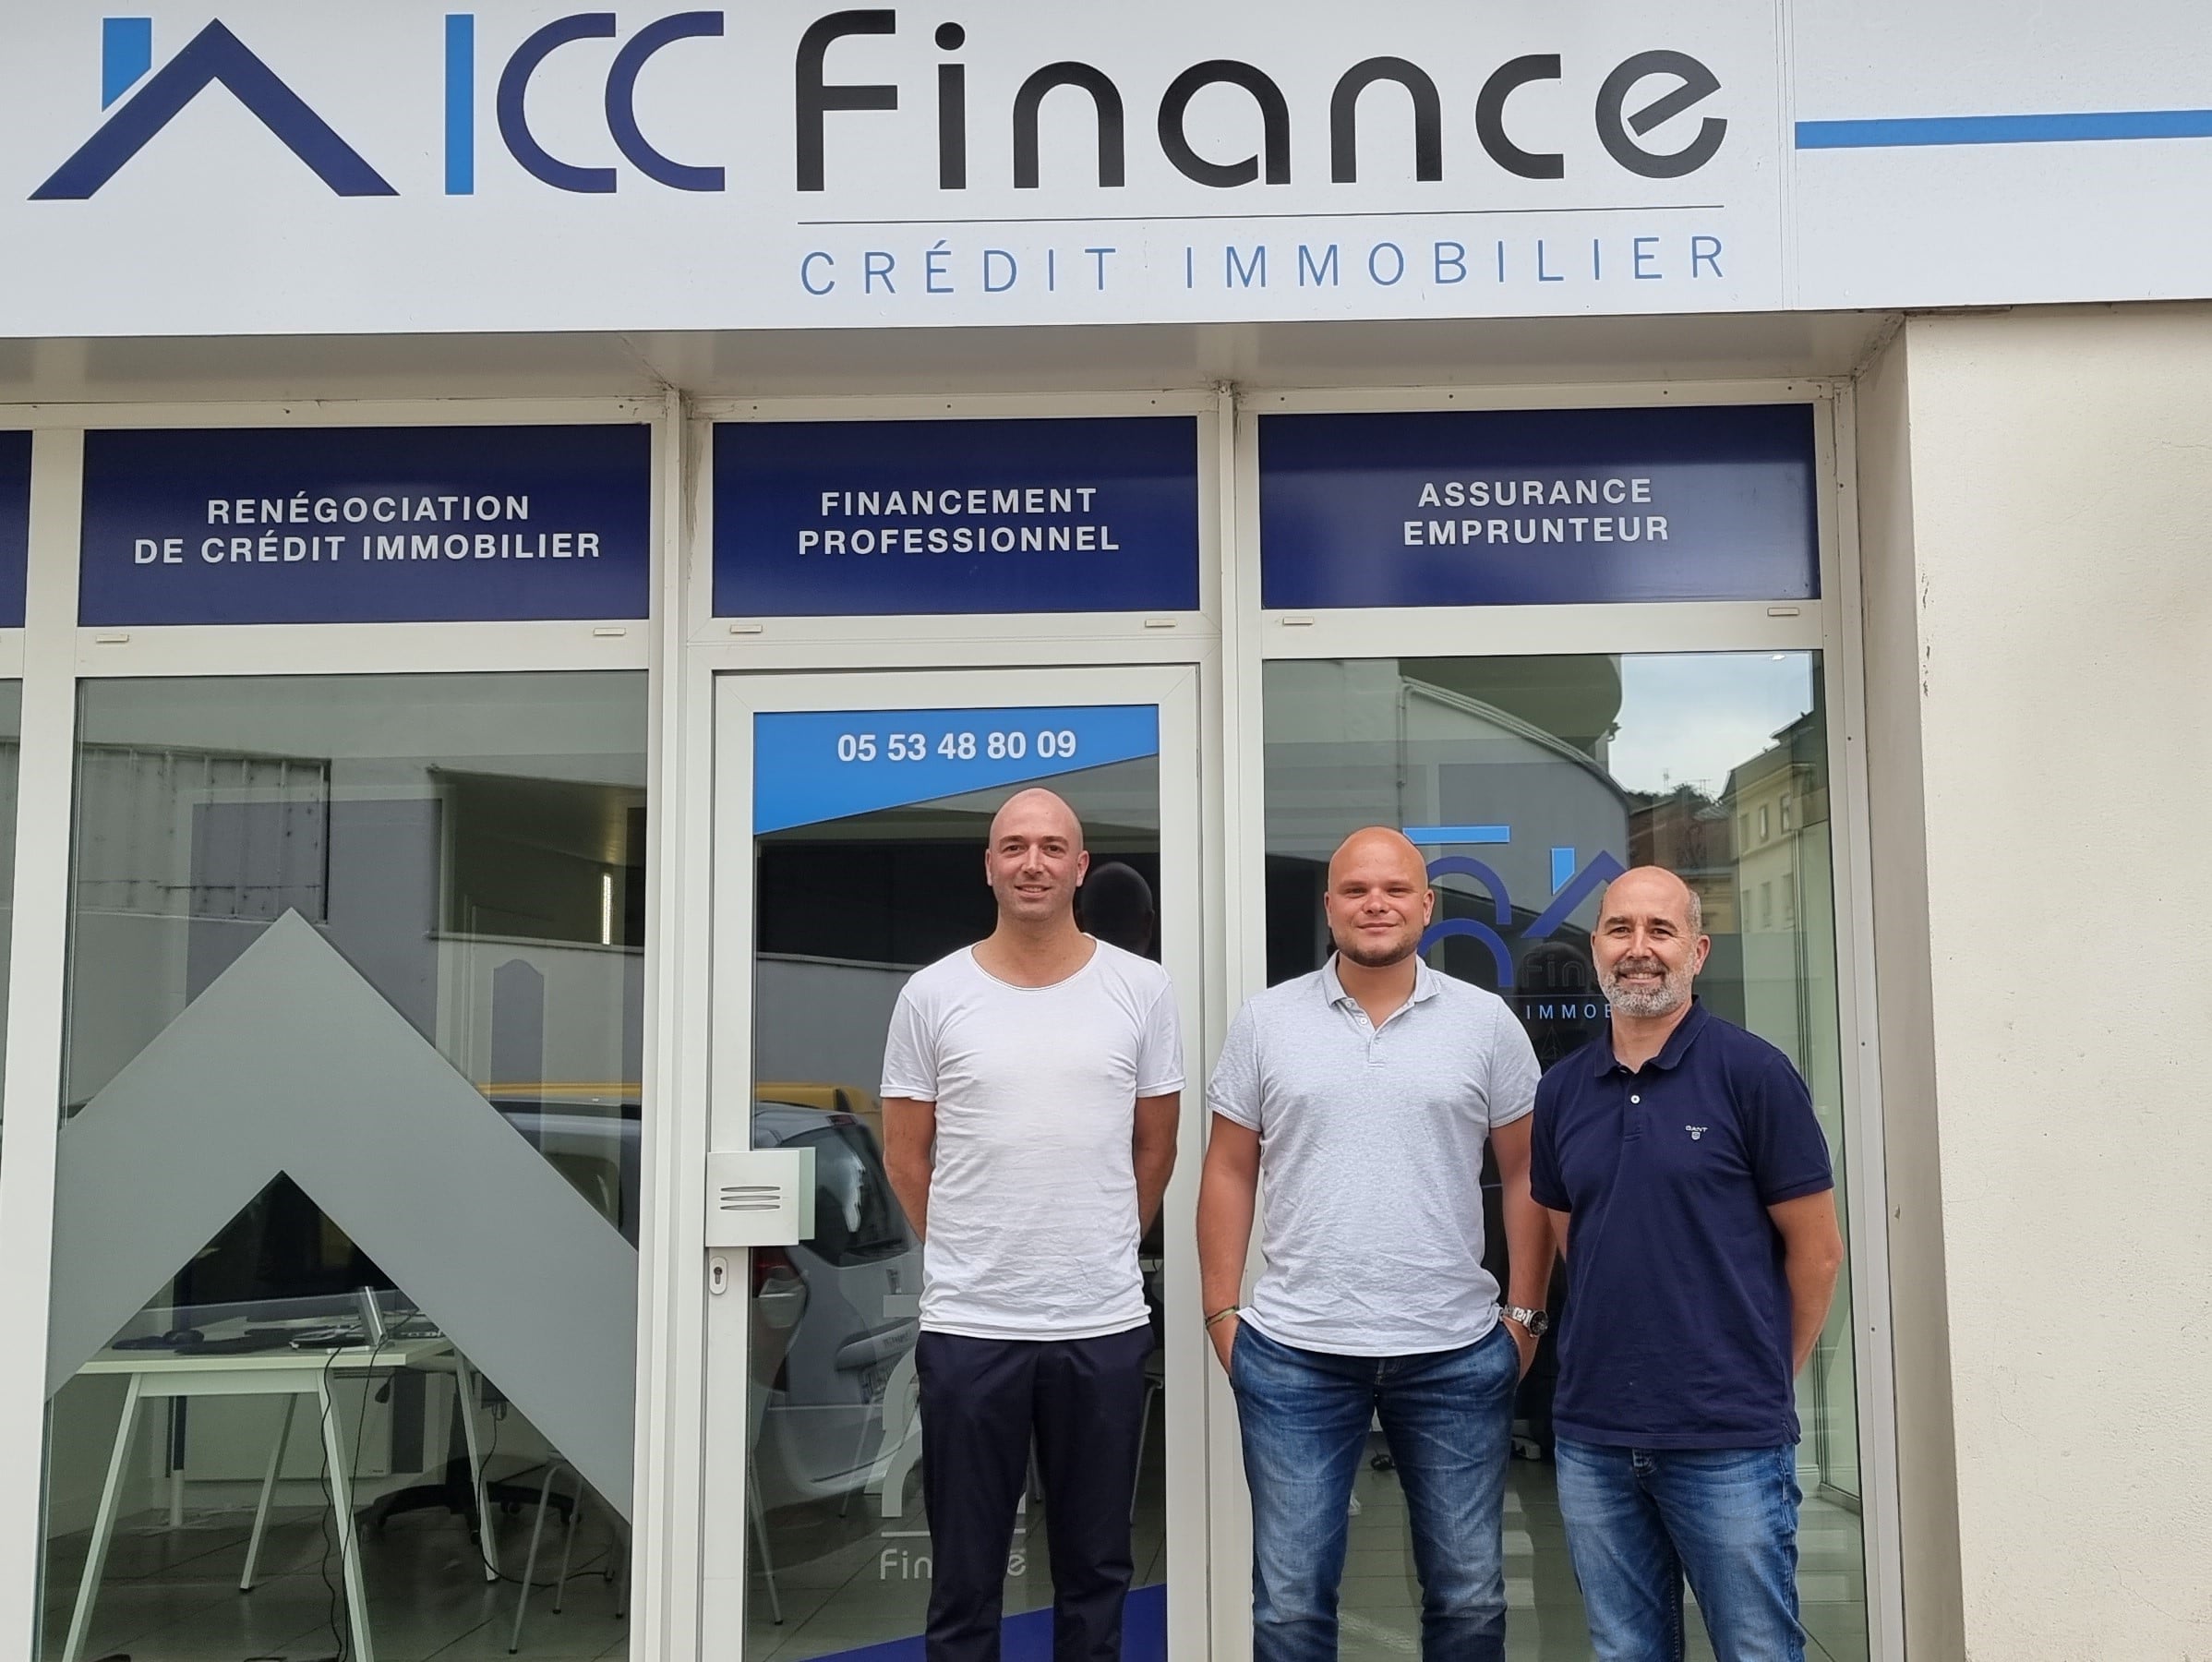 Equipe ICC Finance Agen Miramont de Guyenne Courtier en credit immobilier